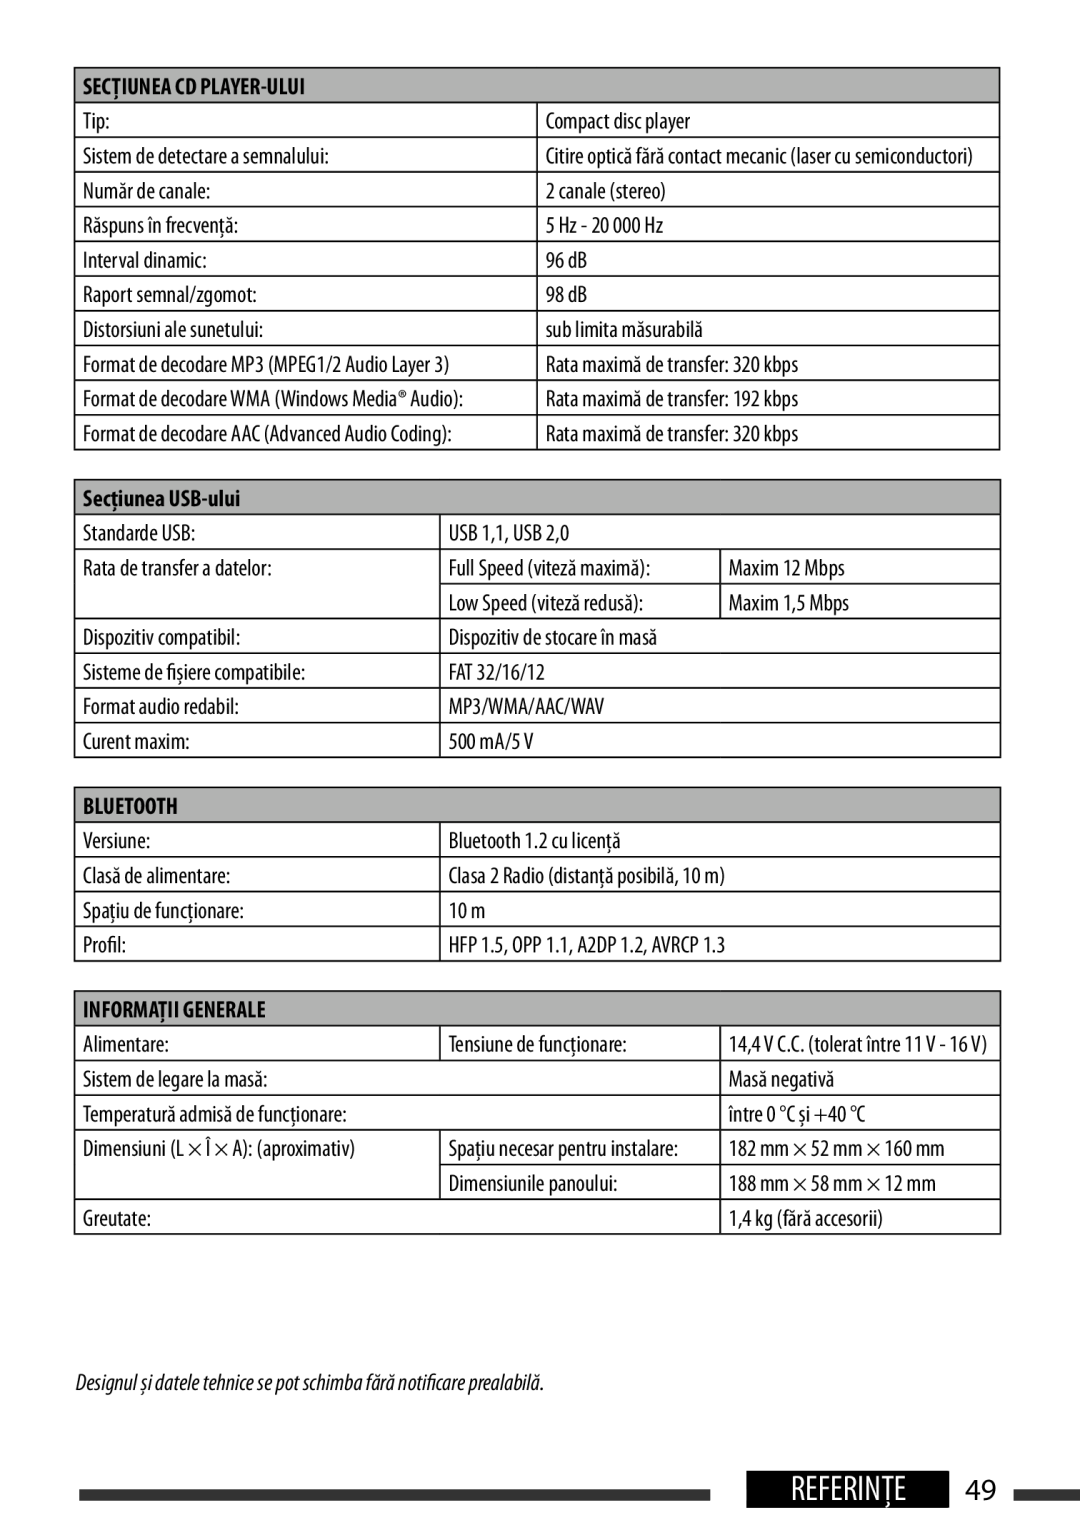 JVC KD-BT22 manual Referinţe, English, Usb Section, Bluetooth, General 